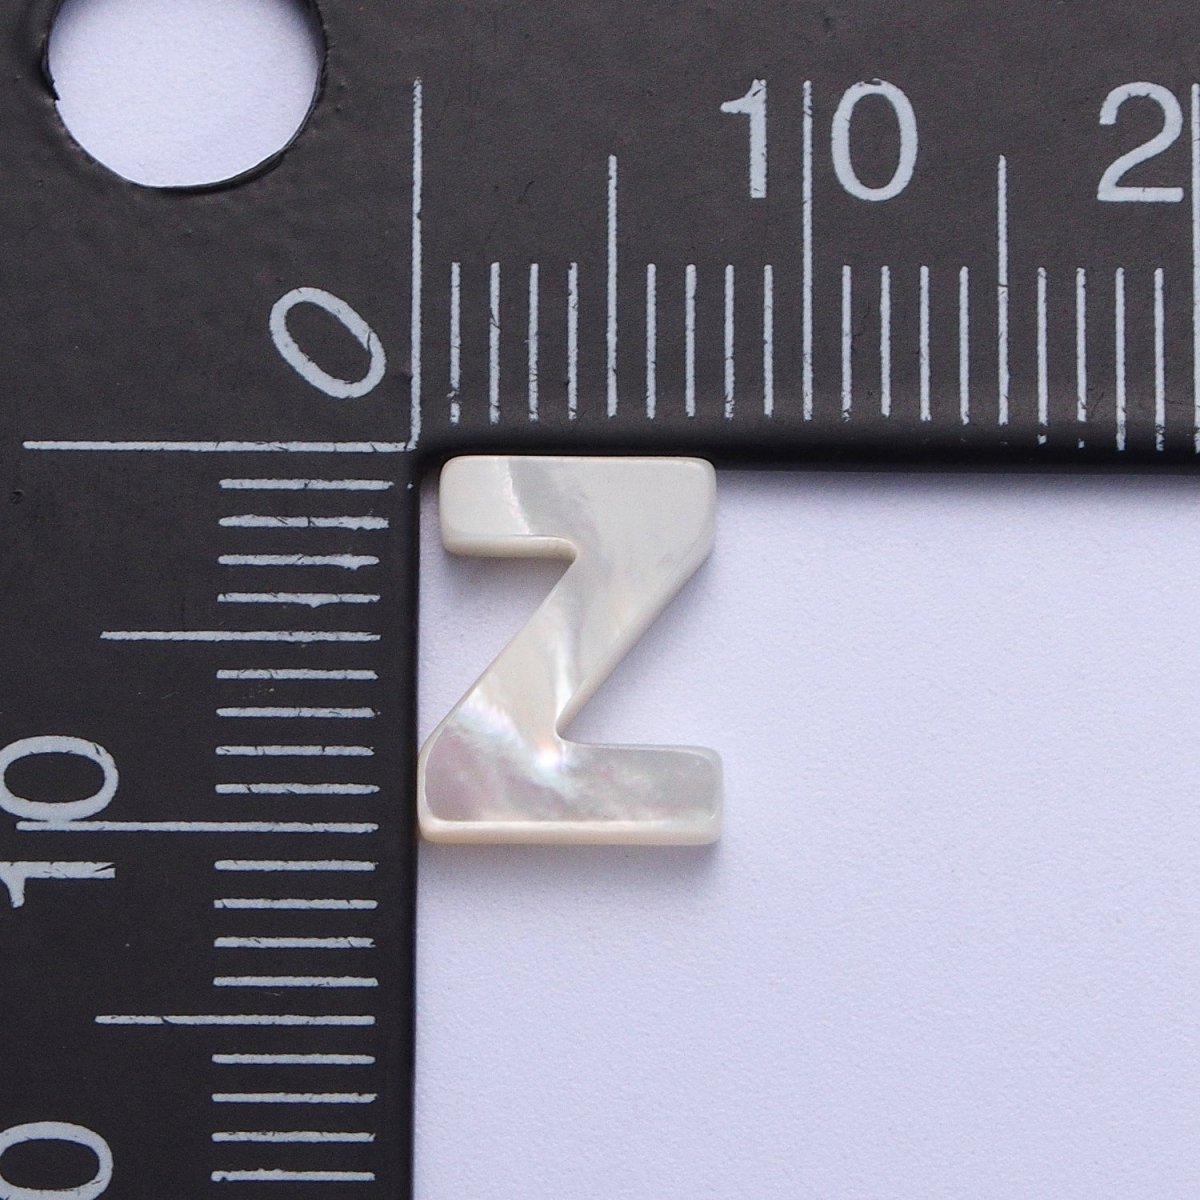 Shell Pearl Initial Alphabet Bead Jewelry Making Supply E-372-E-397 - DLUXCA